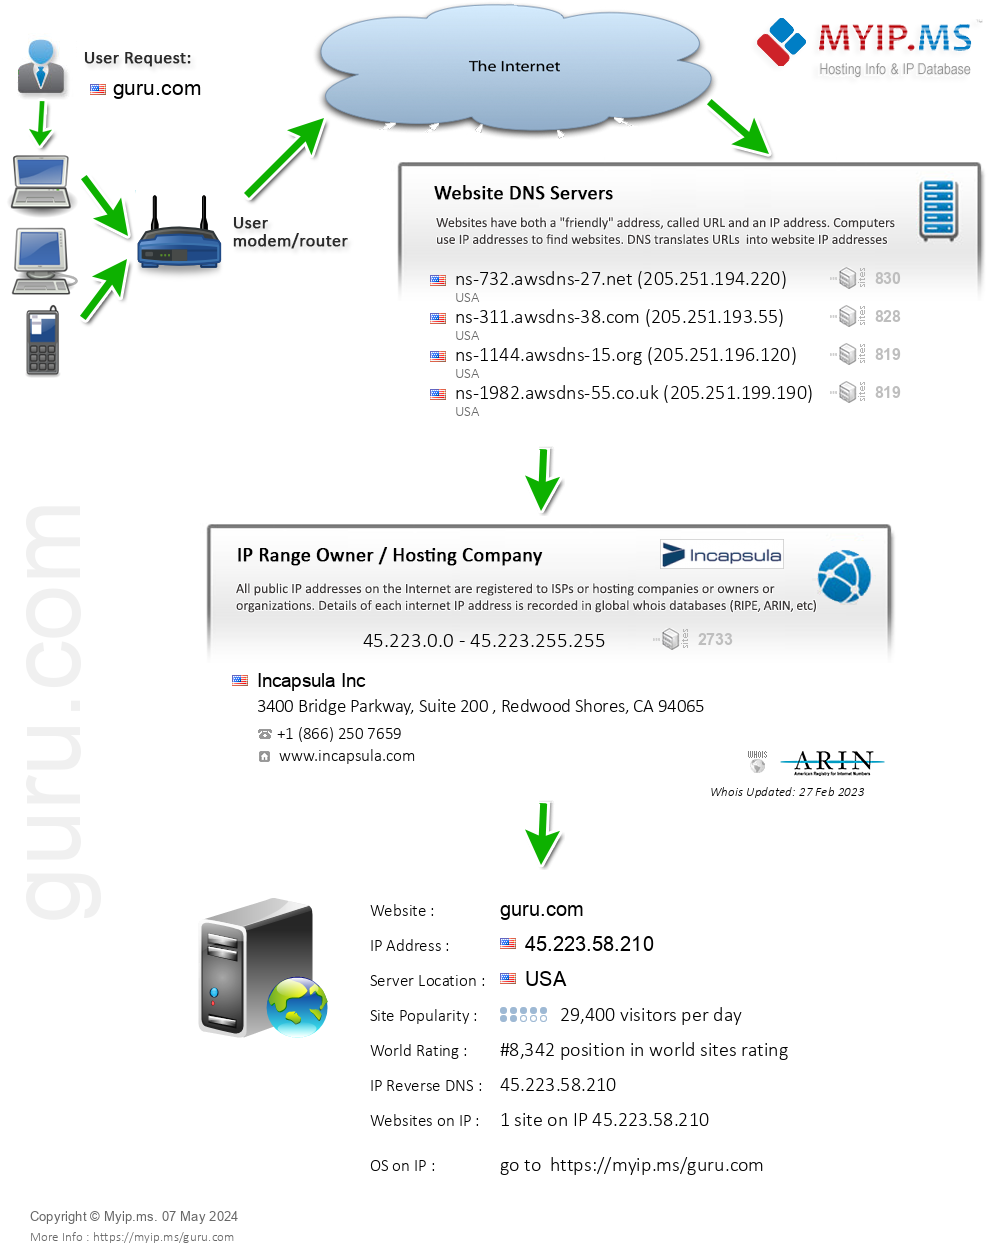 Guru.com - Website Hosting Visual IP Diagram